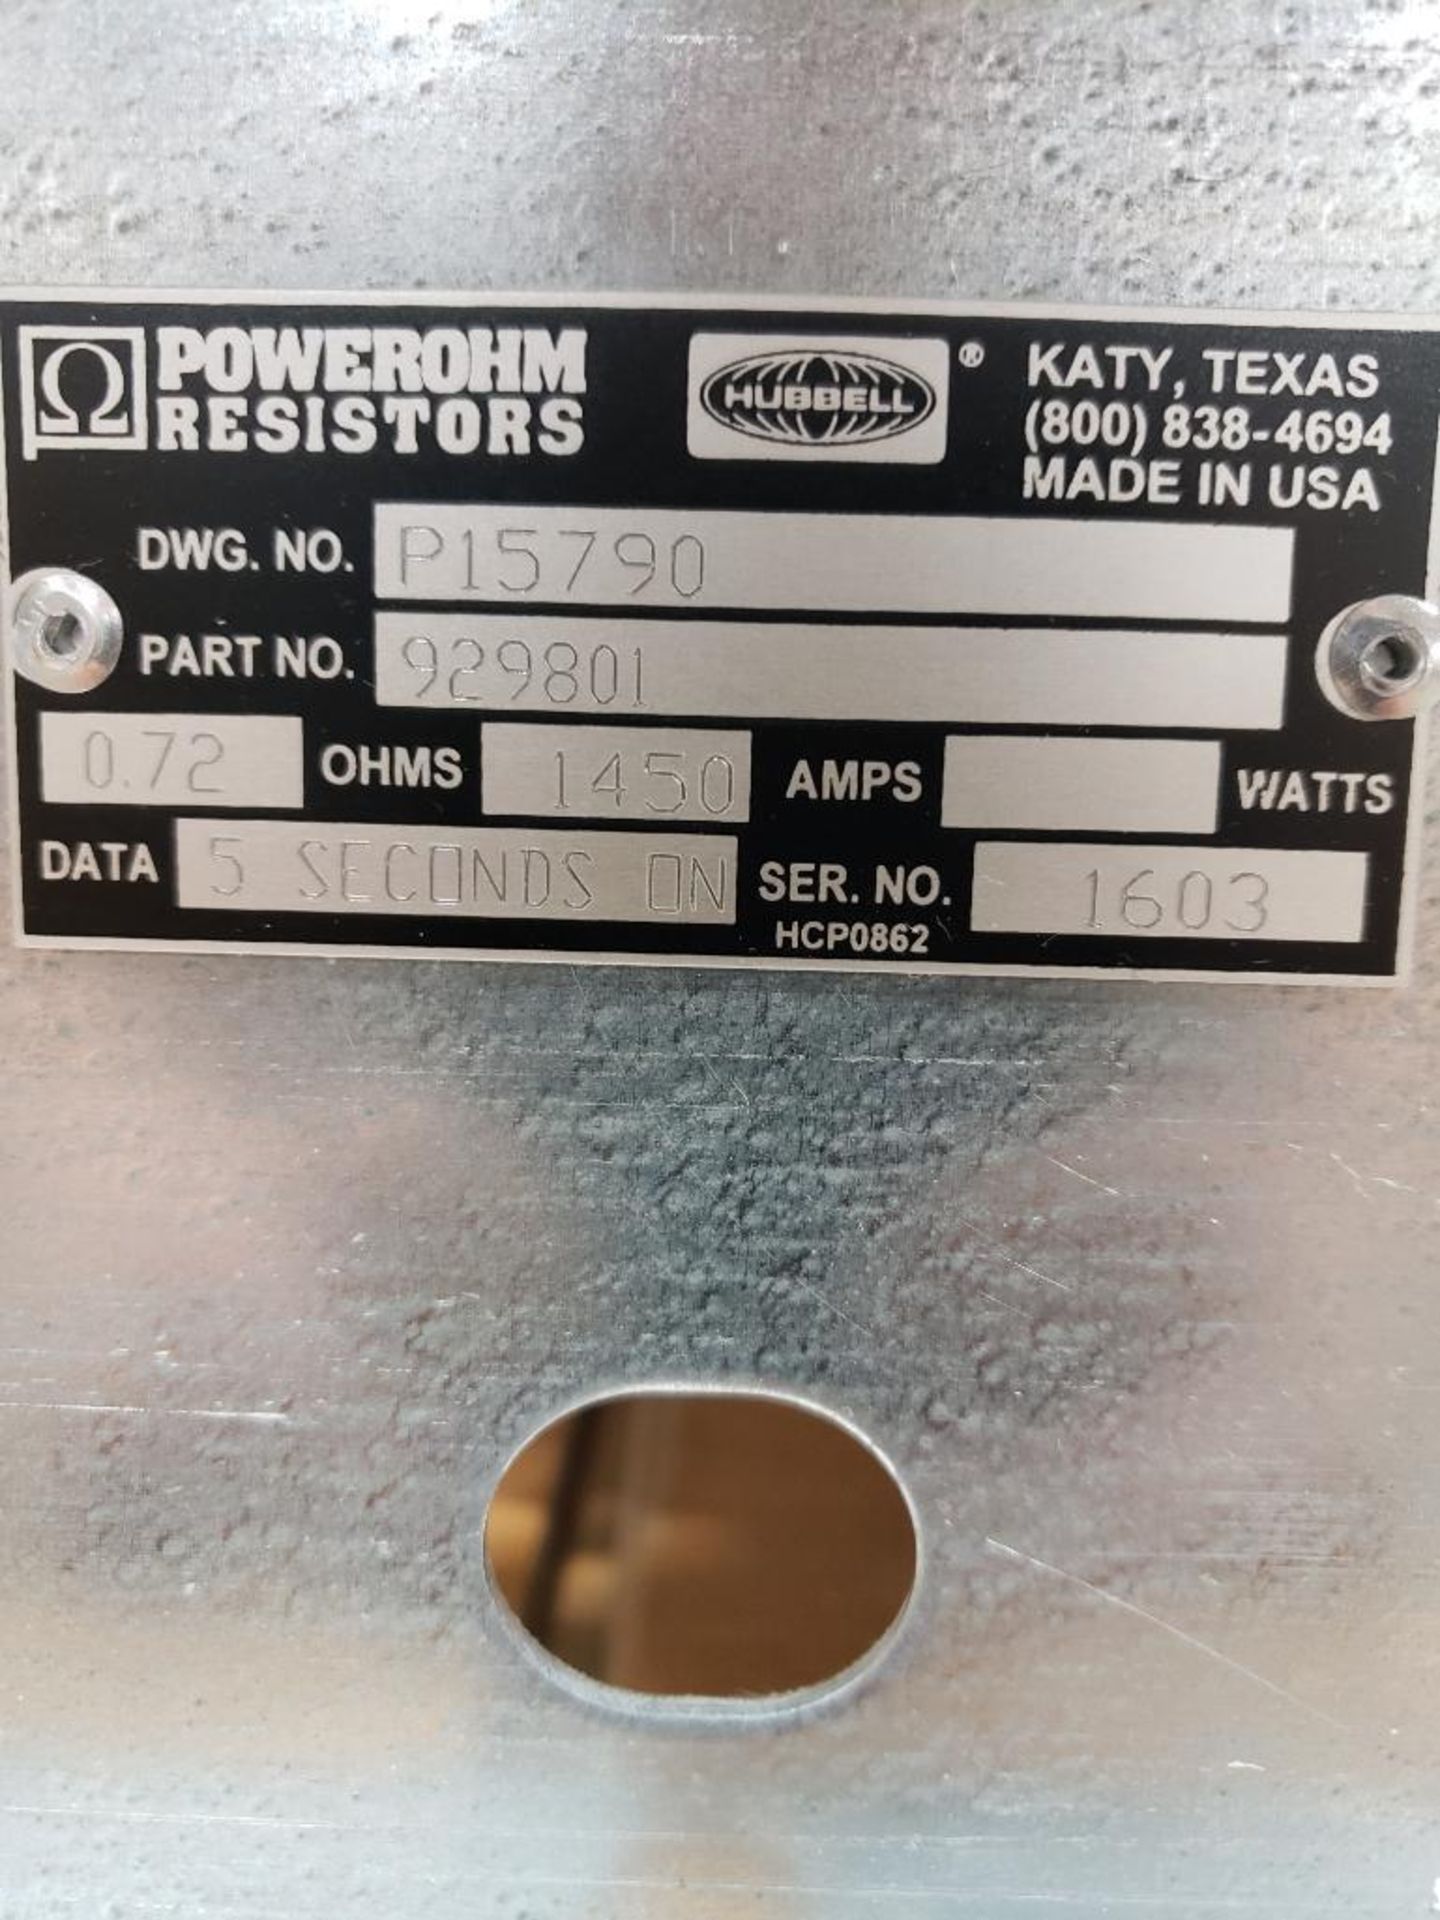 Powerohm Resistors Inc Hubbell 1450 watt brake. .72ohm. Part number 929801. New. - Image 2 of 3